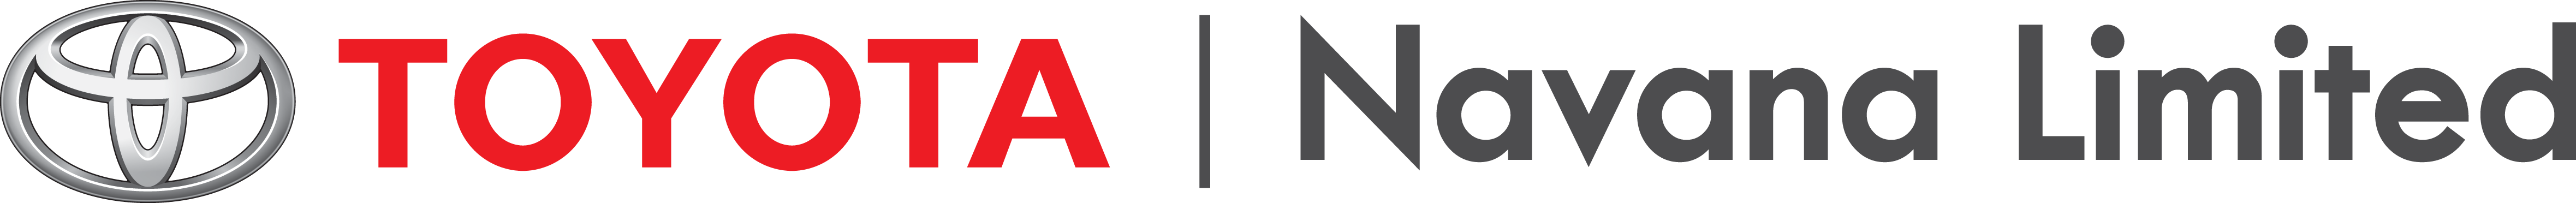 https://assets.roar.media/assets/uRzZWe2BxTAZcGGS_TOYOTA-Navana-Limited-Logo-2018.png